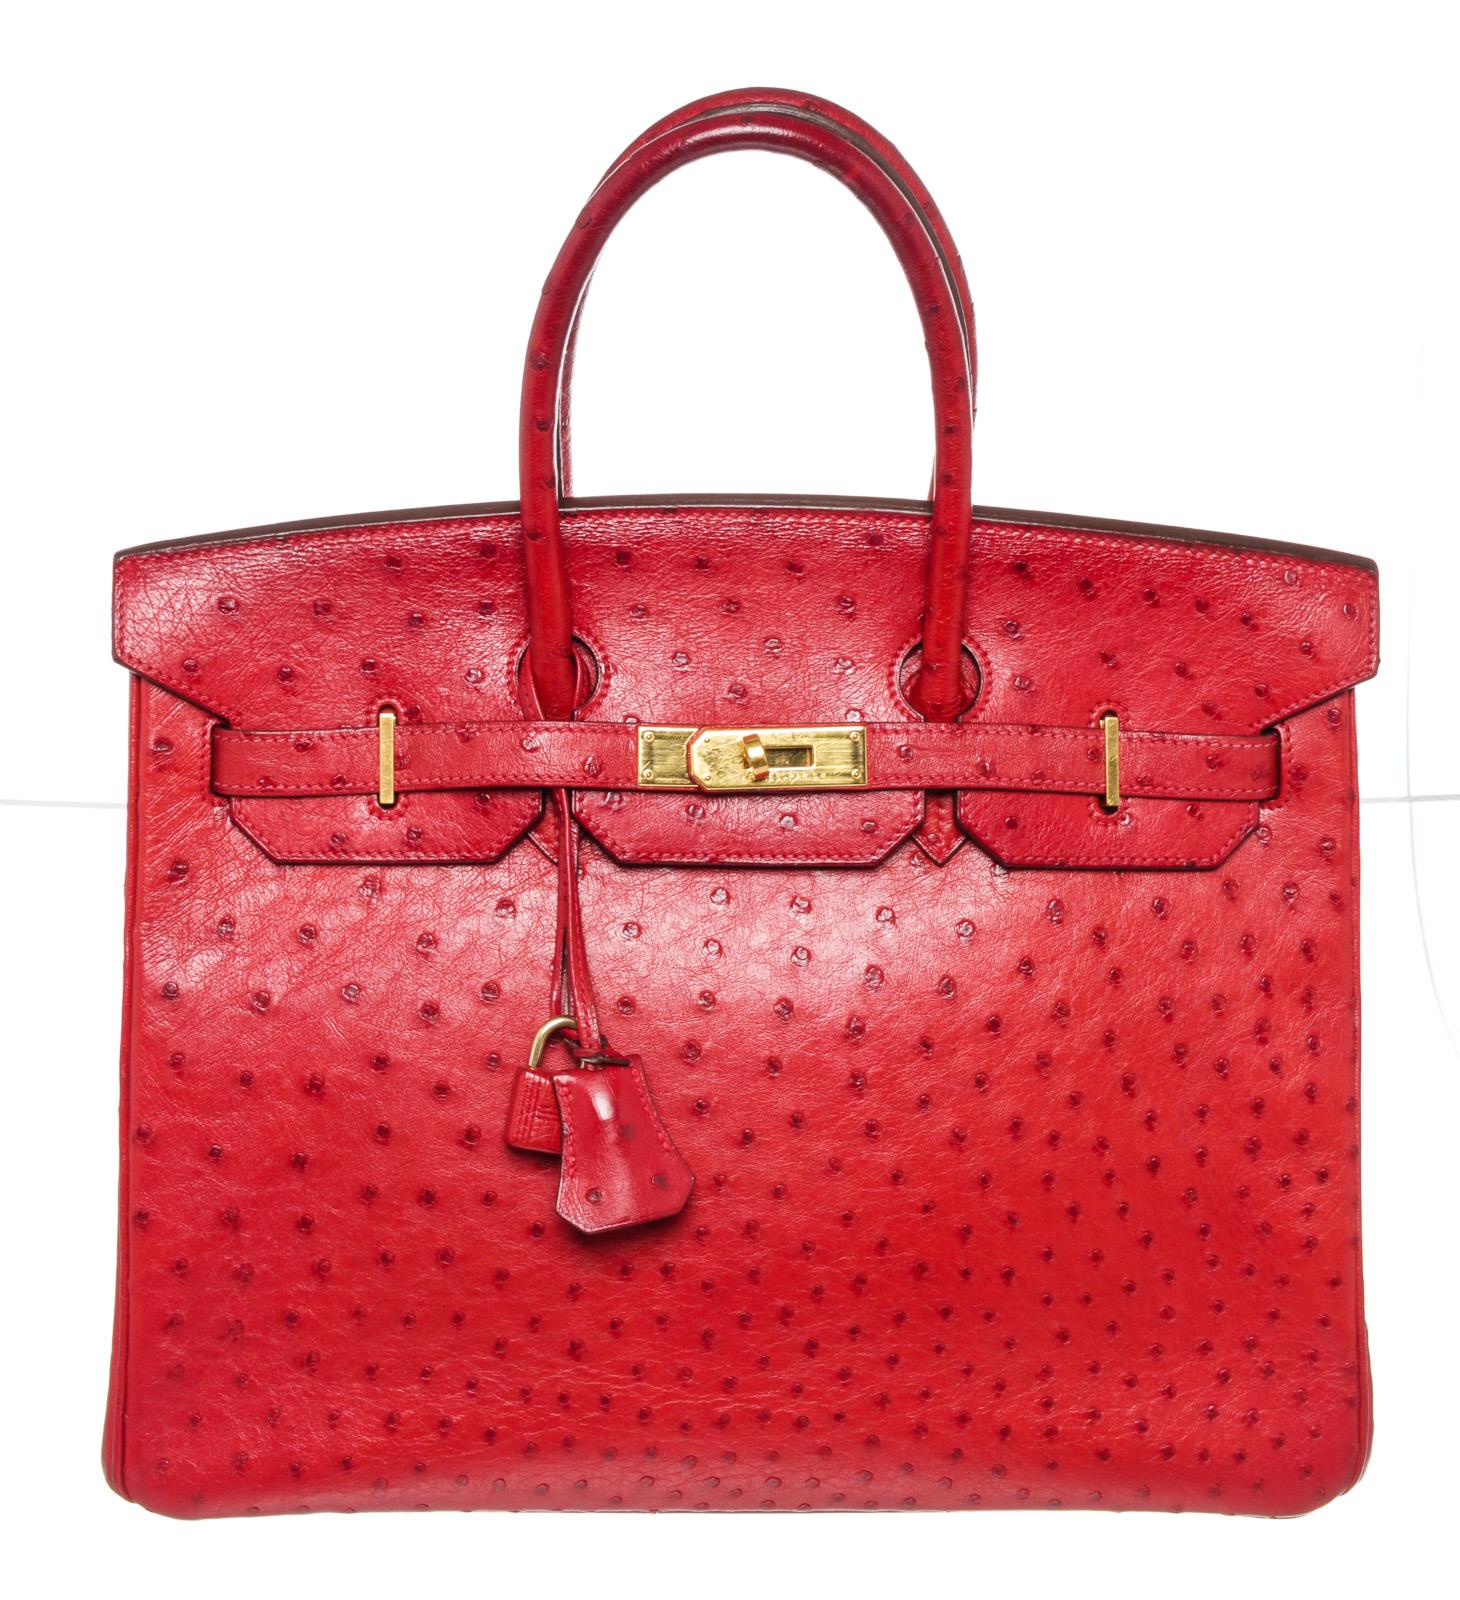 Women's Hermes Red Leather Ostrich GHW Birkin 35cm Satchel Bag